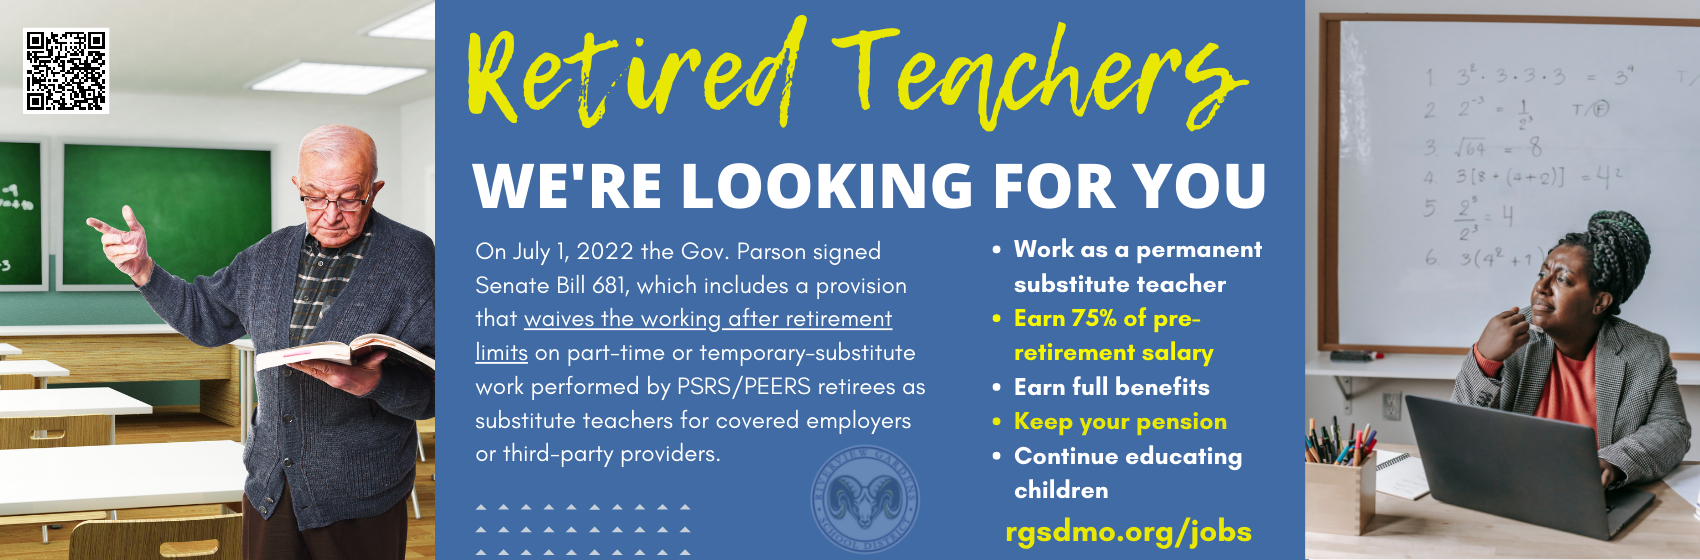 Retired Teacher Recruiting